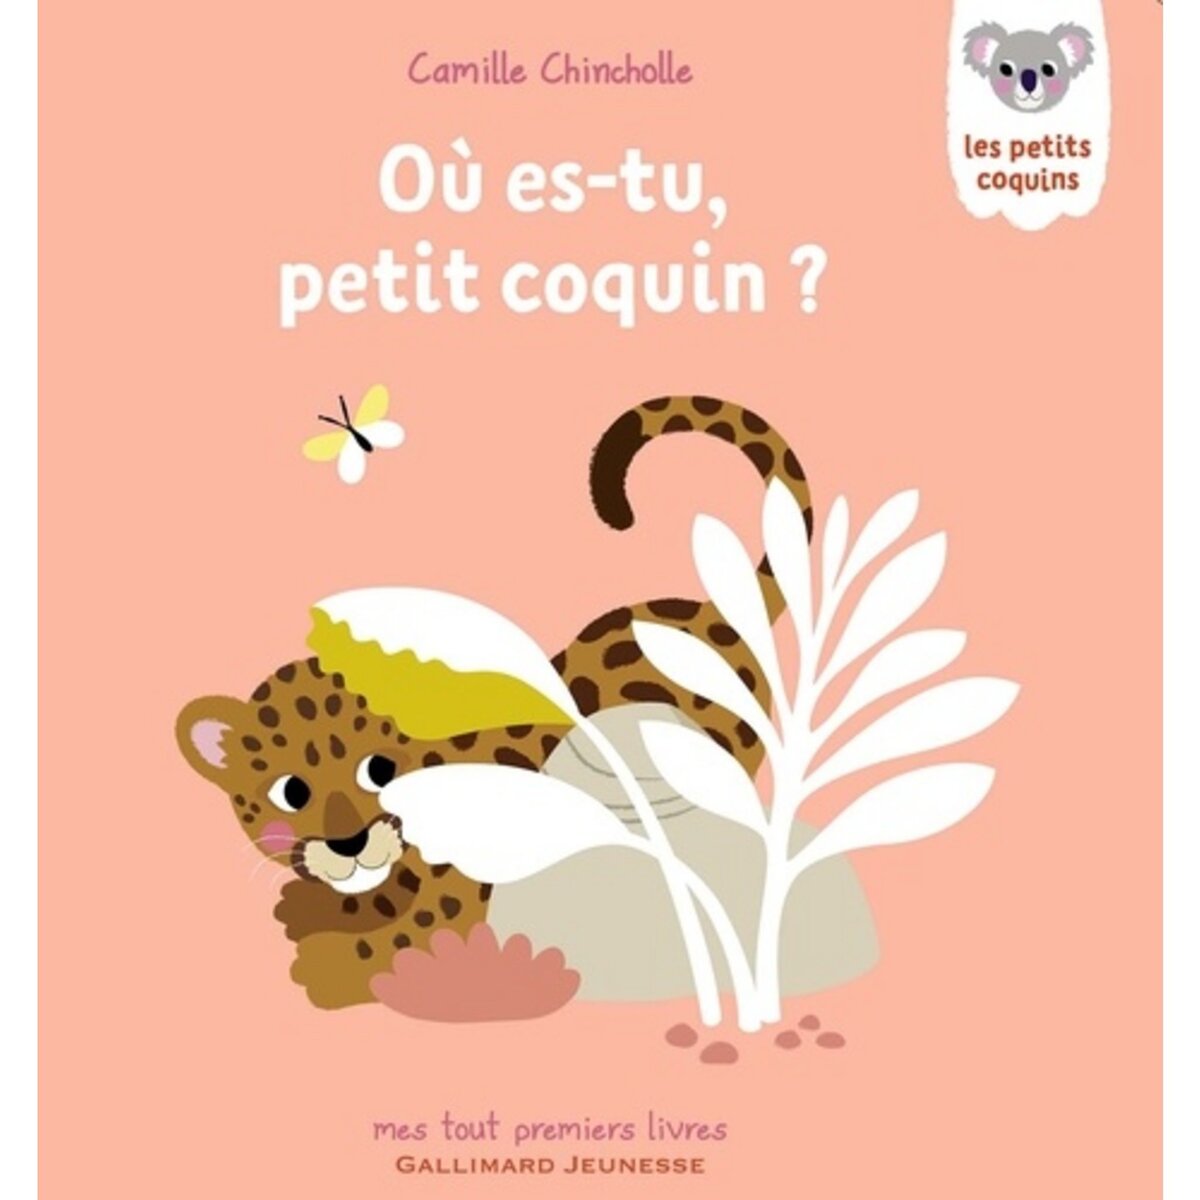  LES PETITS COQUINS : OU ES-TU, PETIT COQUIN ?, Chincholle Camille